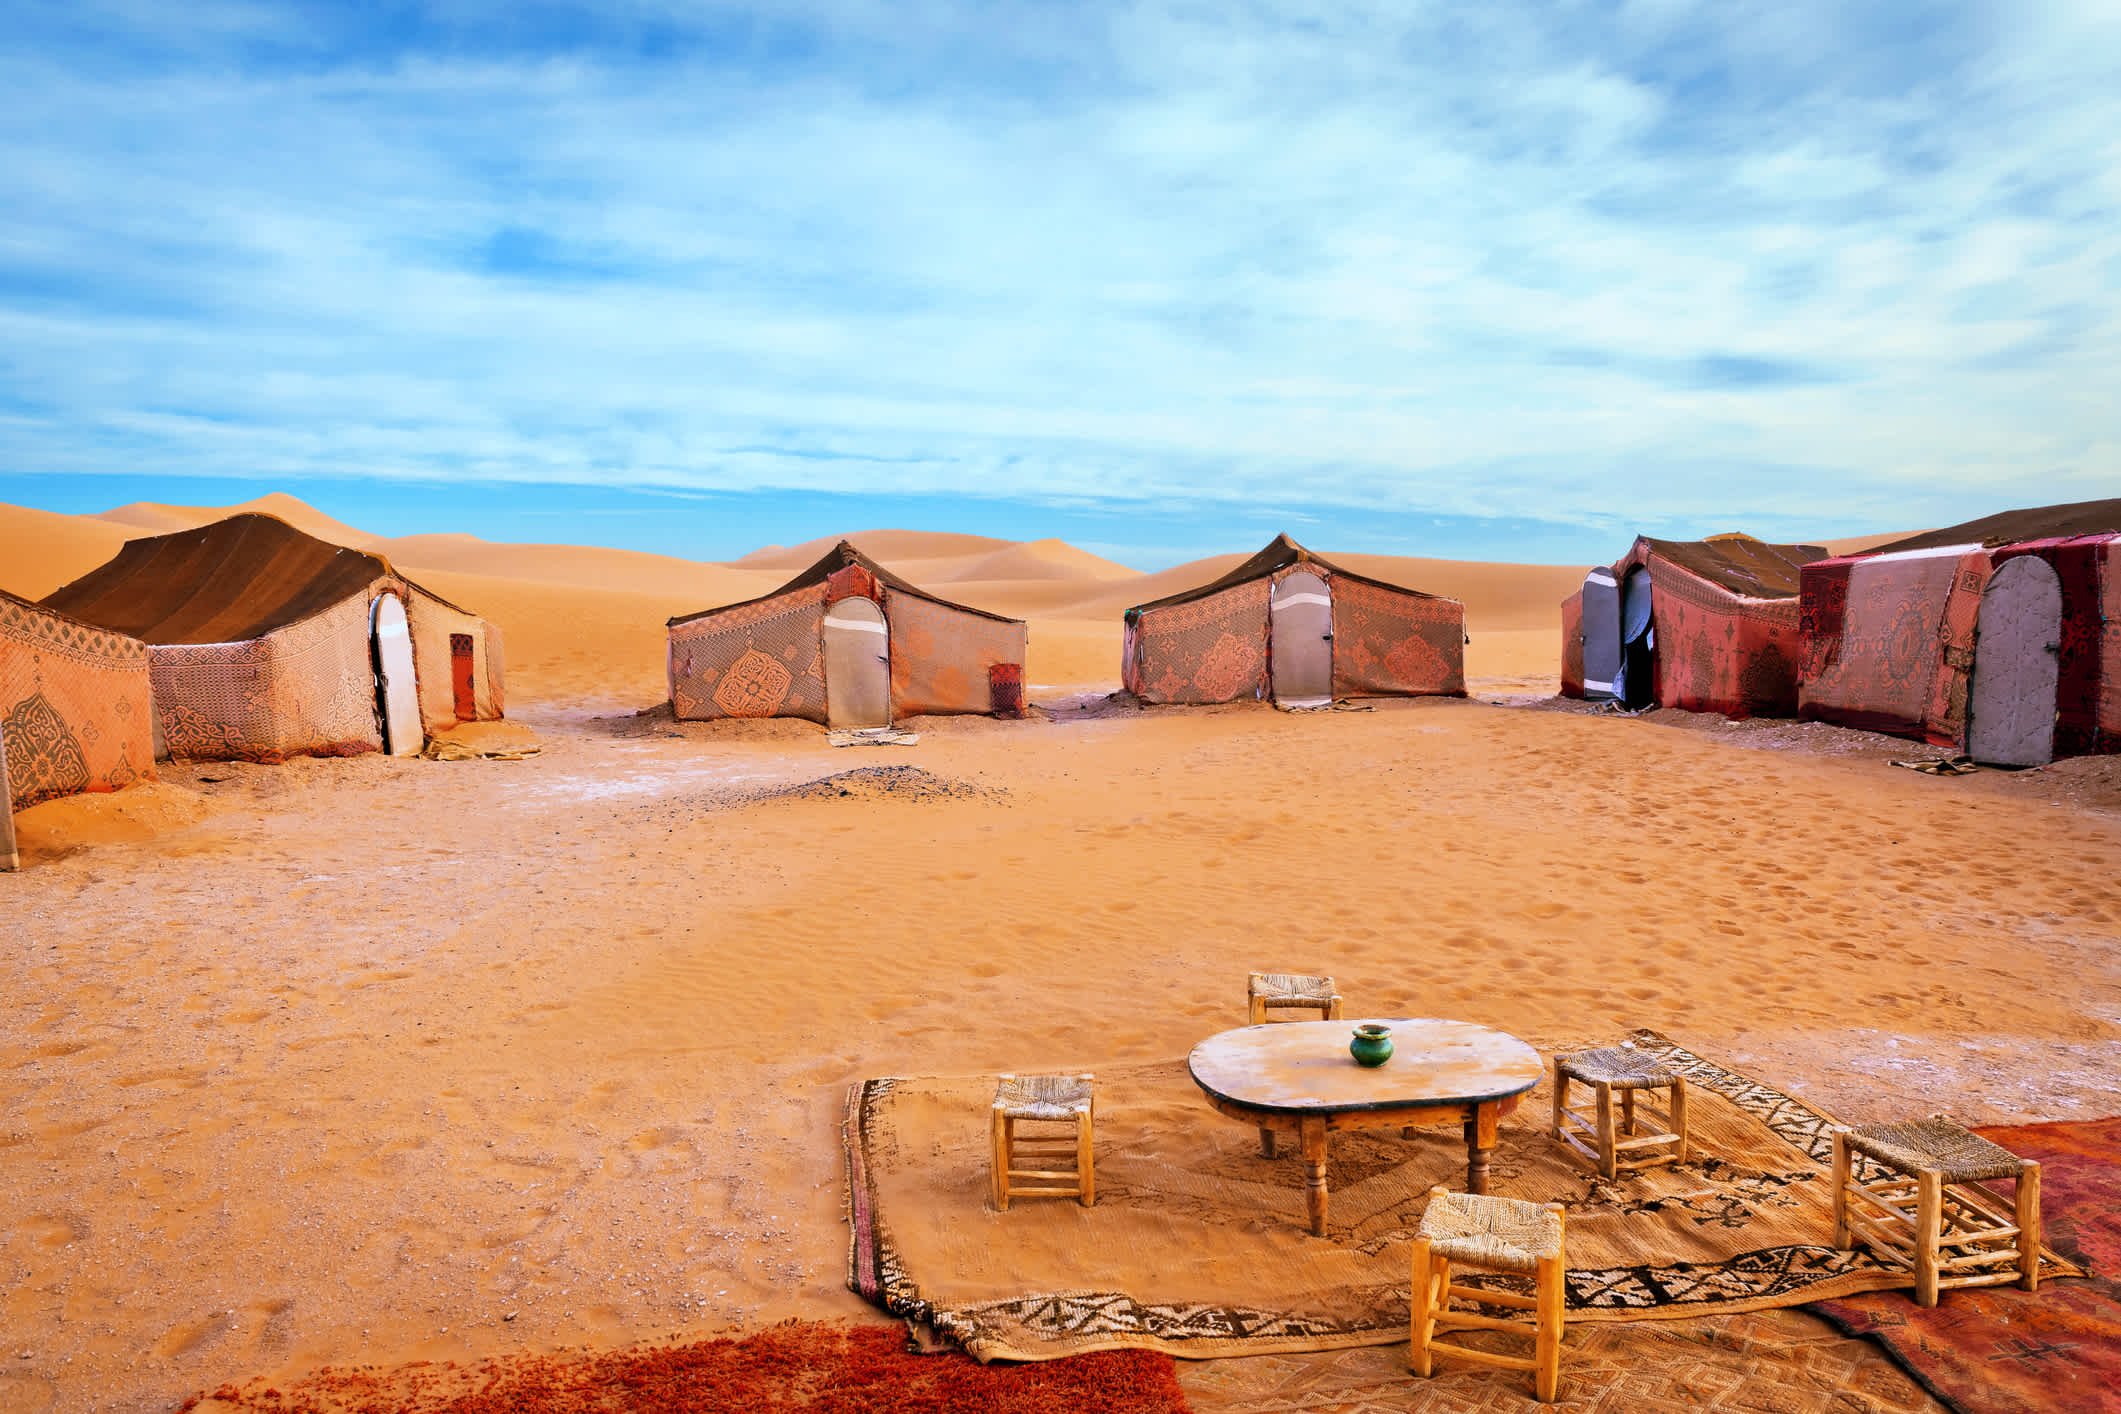 Berber, Teppich-Zelte in Camp in Erg Chigaga, Marokko, Afrika